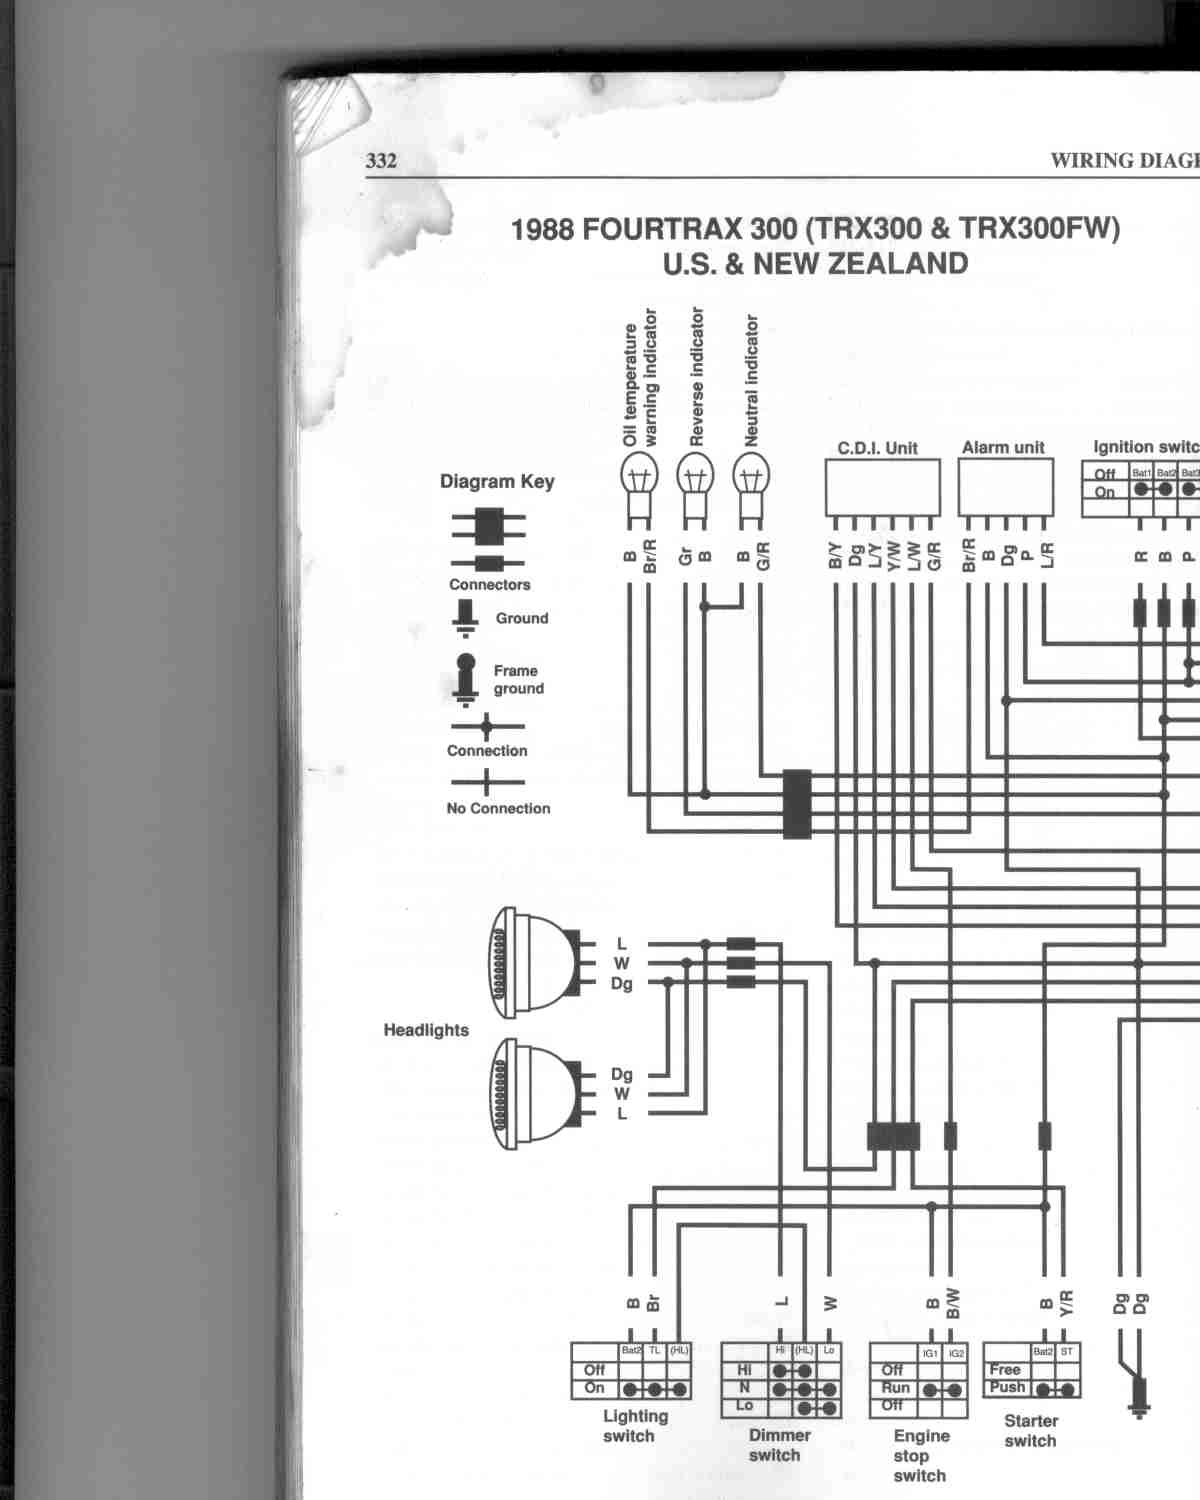 Trx300 Wiring Diagram Needed